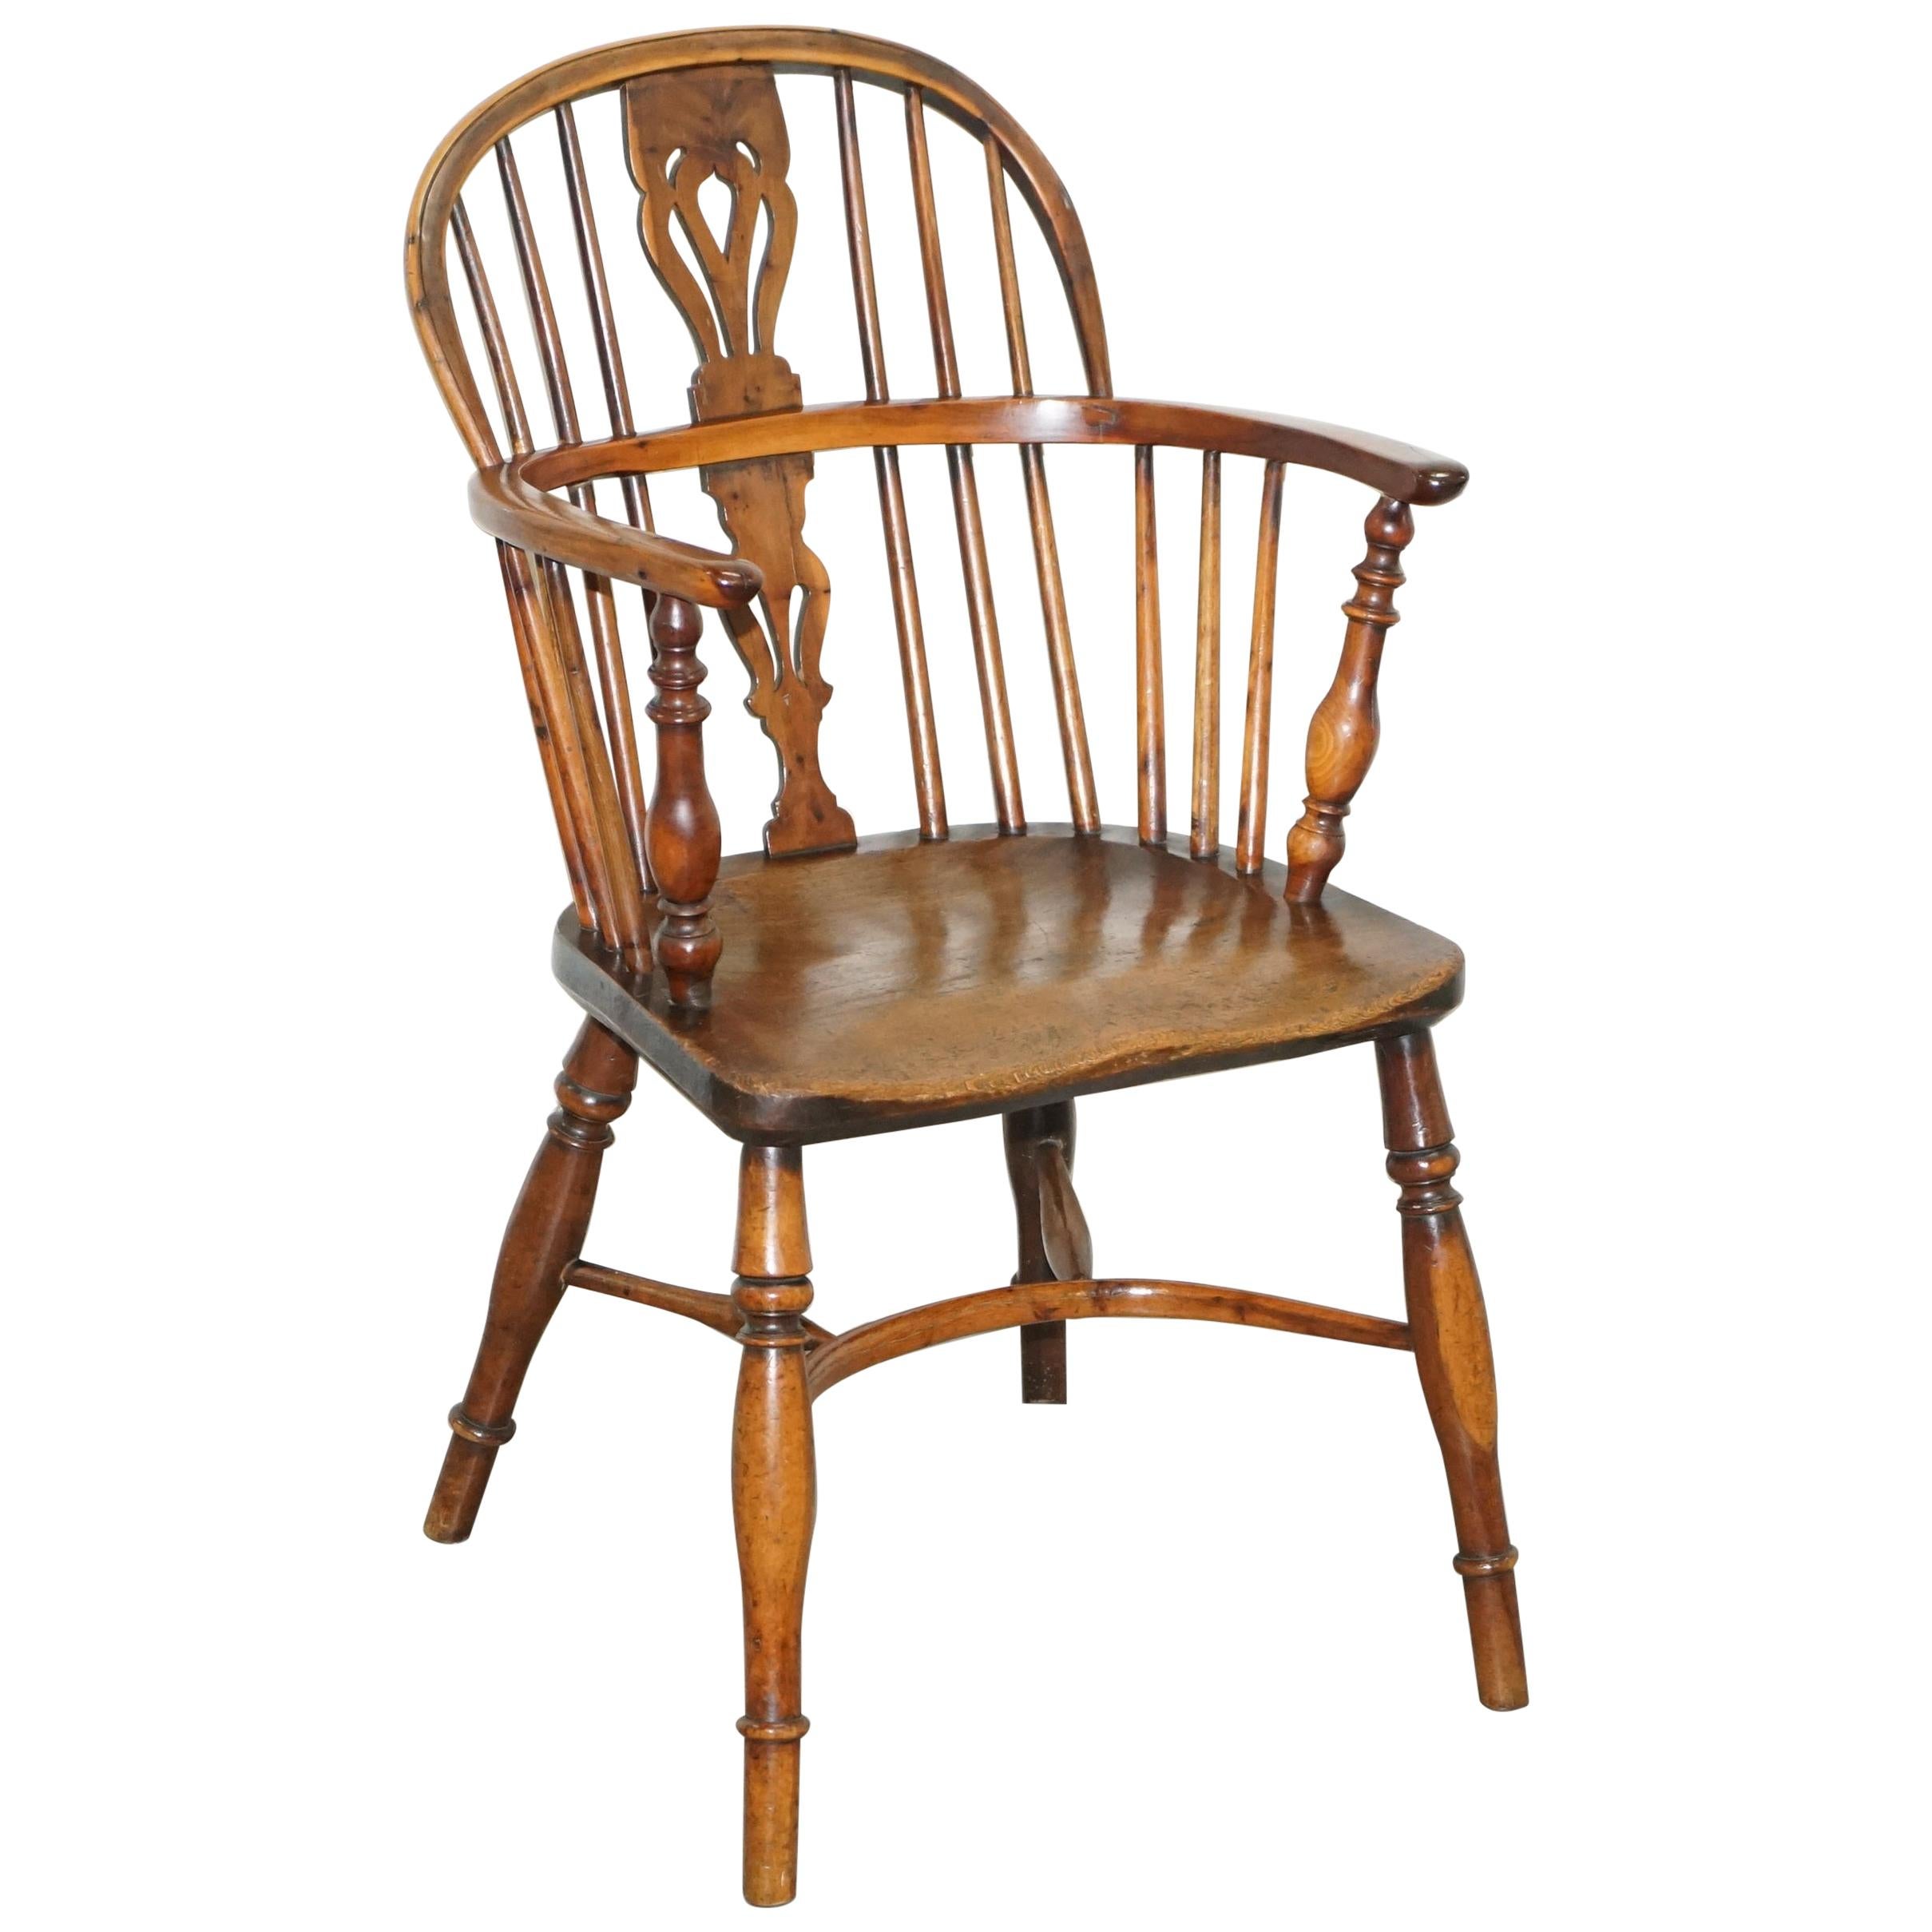 1 of 6 Burr Yew Wood Windsor Armchairs circa 1860 English Countryhouse Furniture